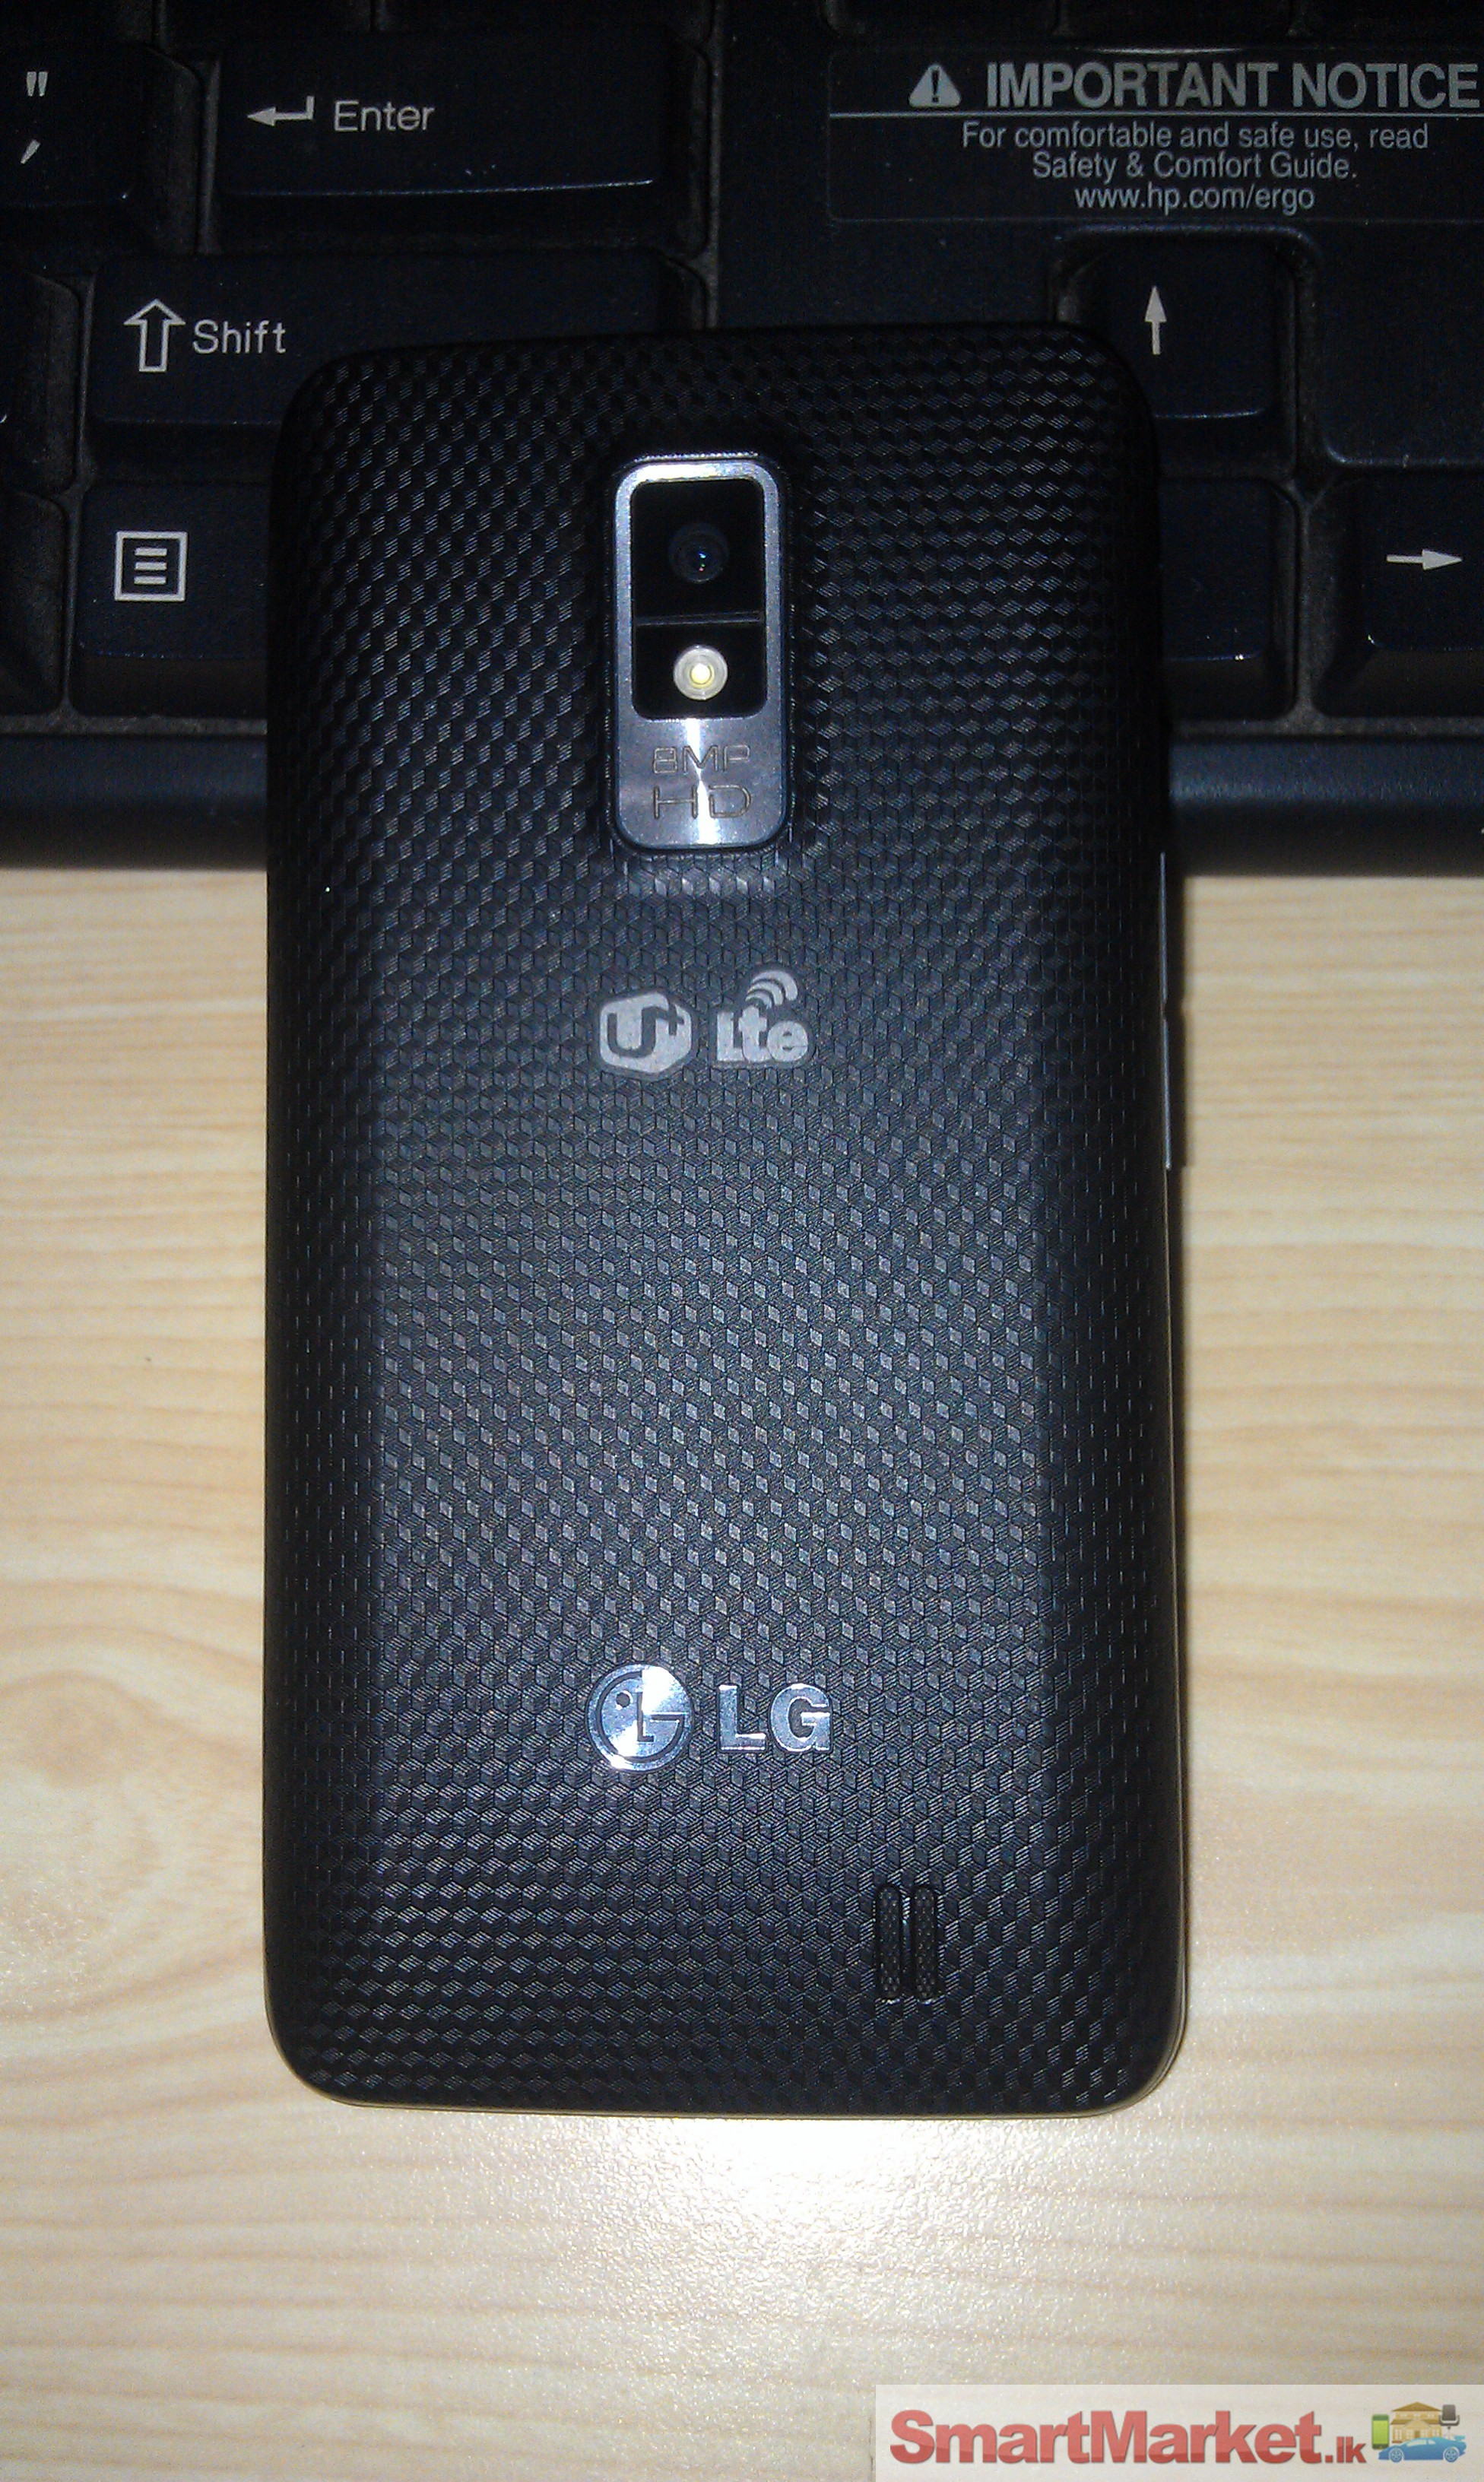 LG Optimus 4G for sale